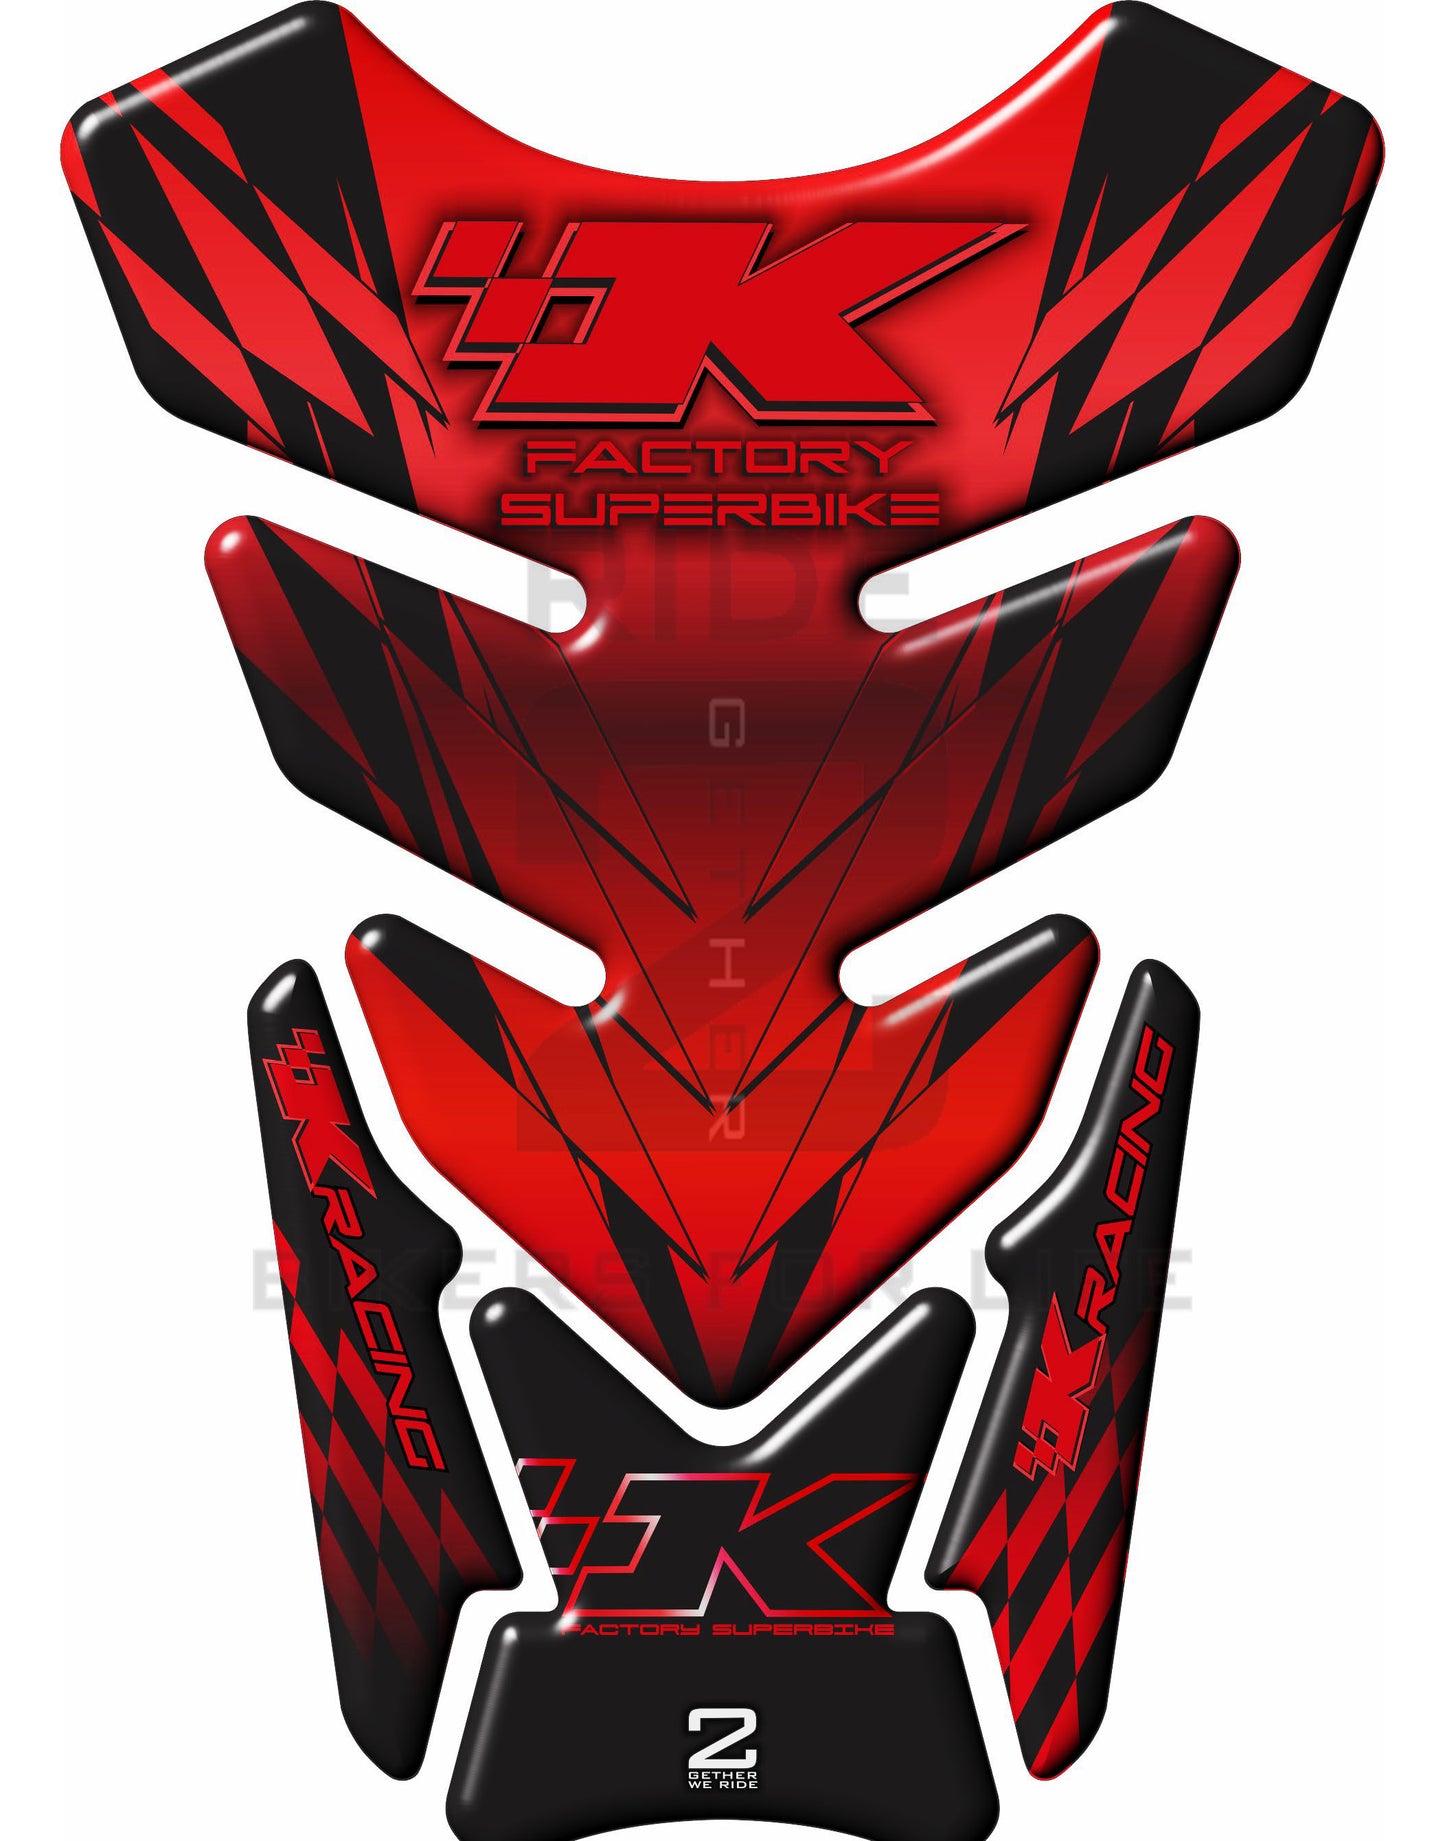 Kawasaki Factory Super Bike, Red and Black Tank Pad  Protector 2006 - 2022. K Racing